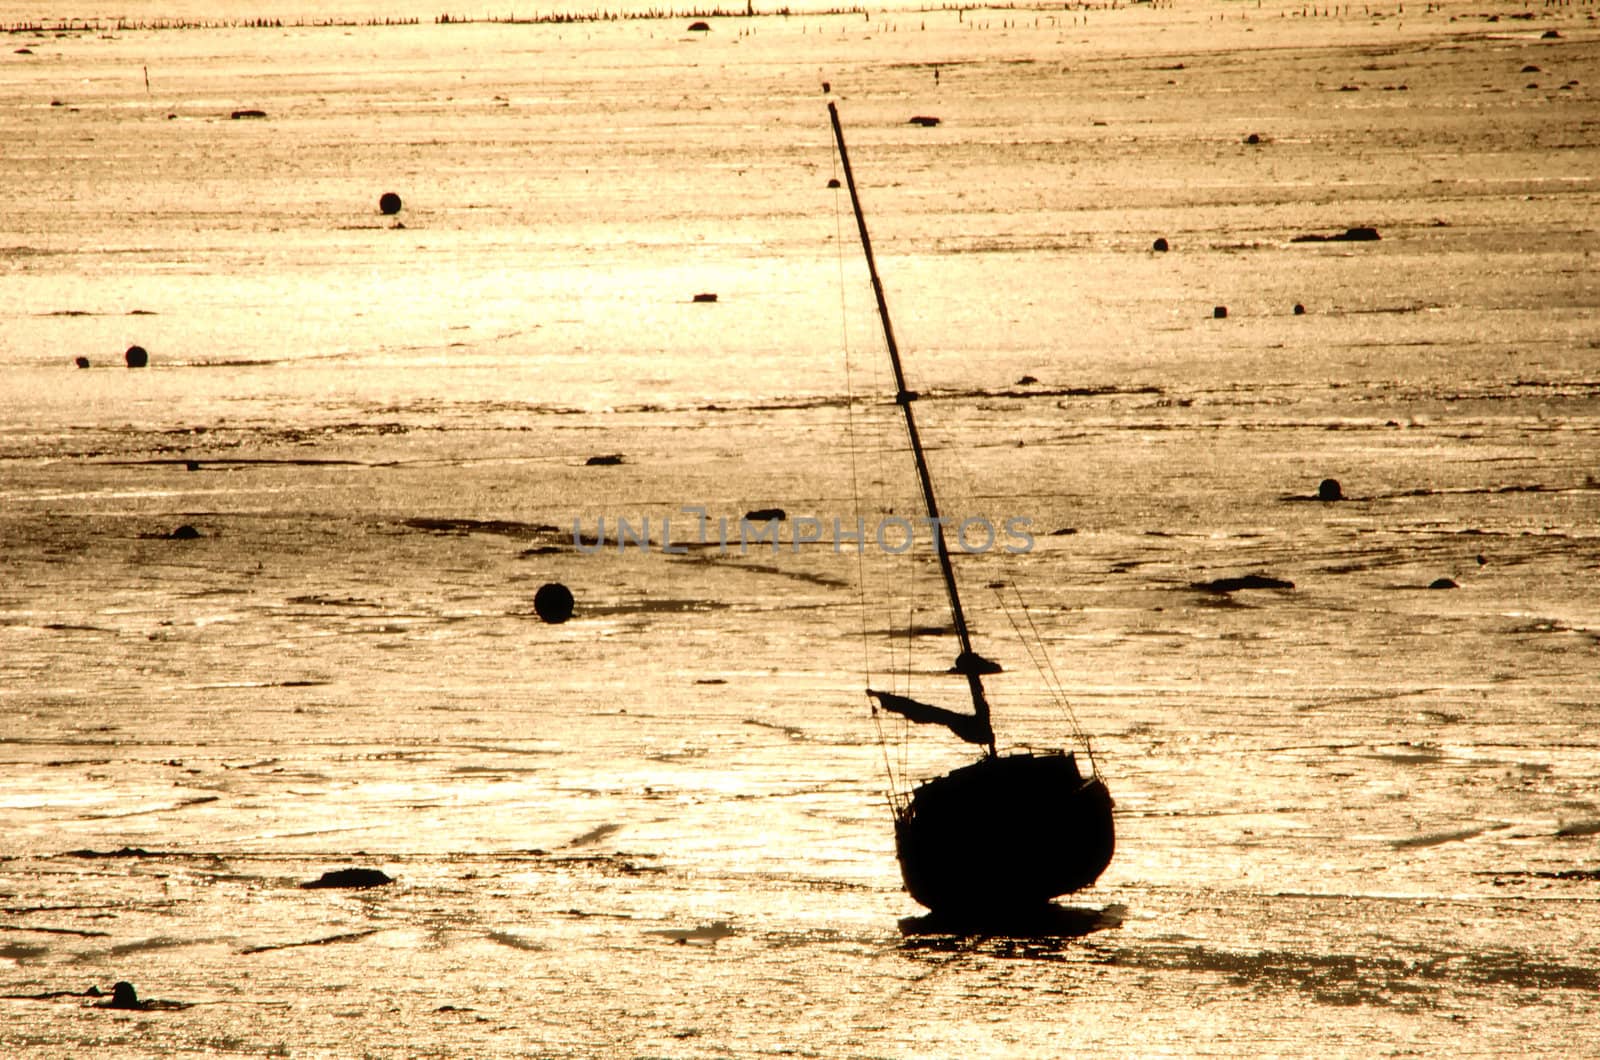 the sailboat at low tide by njaj